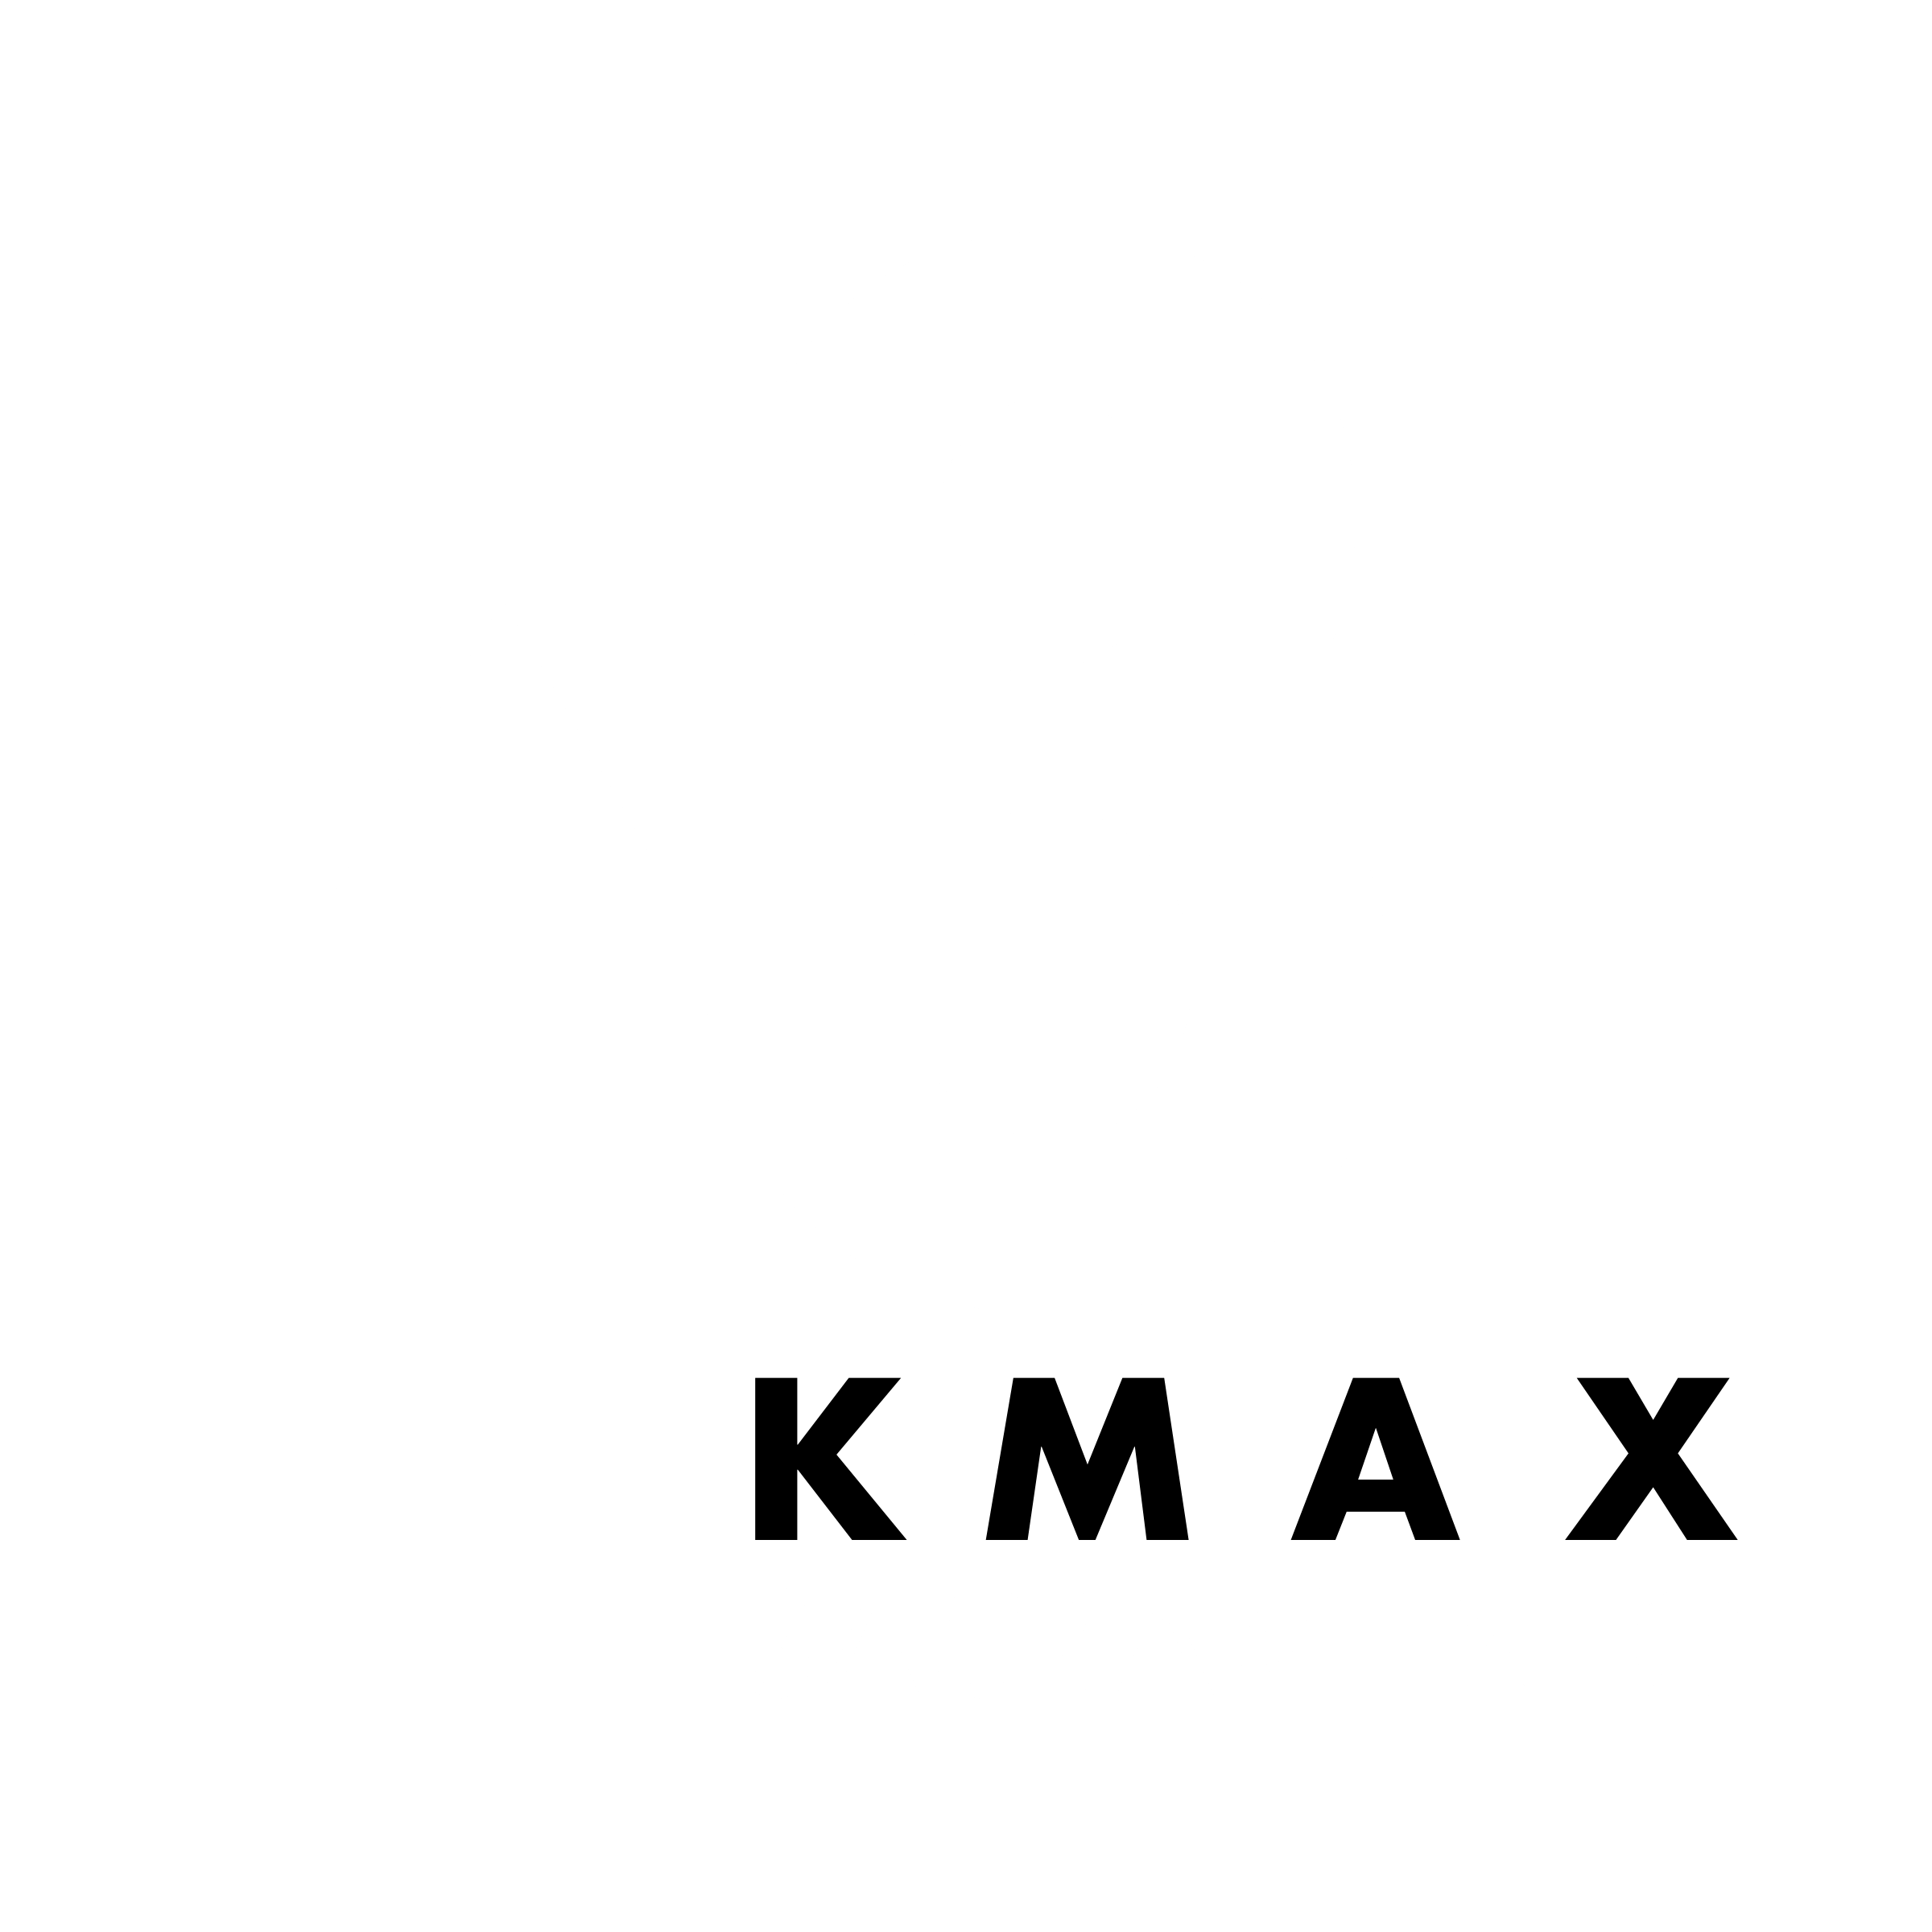 UPN Logo - UPN 31 KMAX Sacramento Logo PNG Transparent & SVG Vector